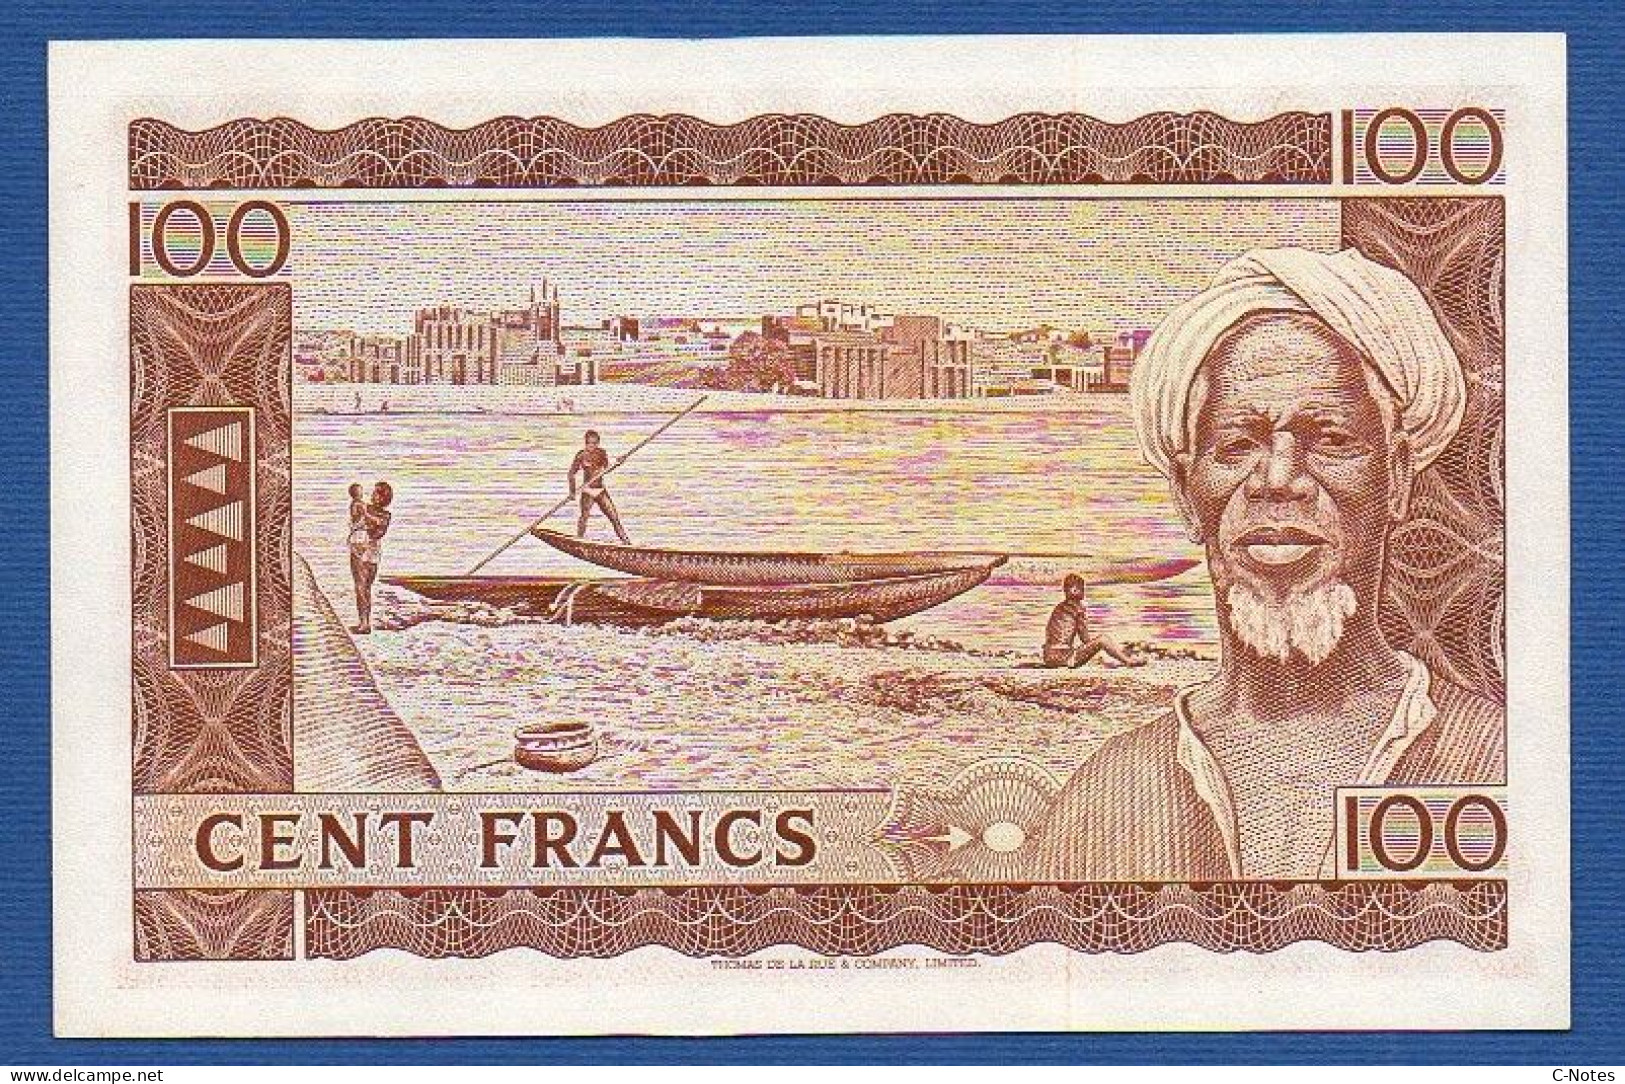 MALI - P. 7 – 100 Francs 22.09.1960 (1967) UNC, S/n Q1241327 - Mali